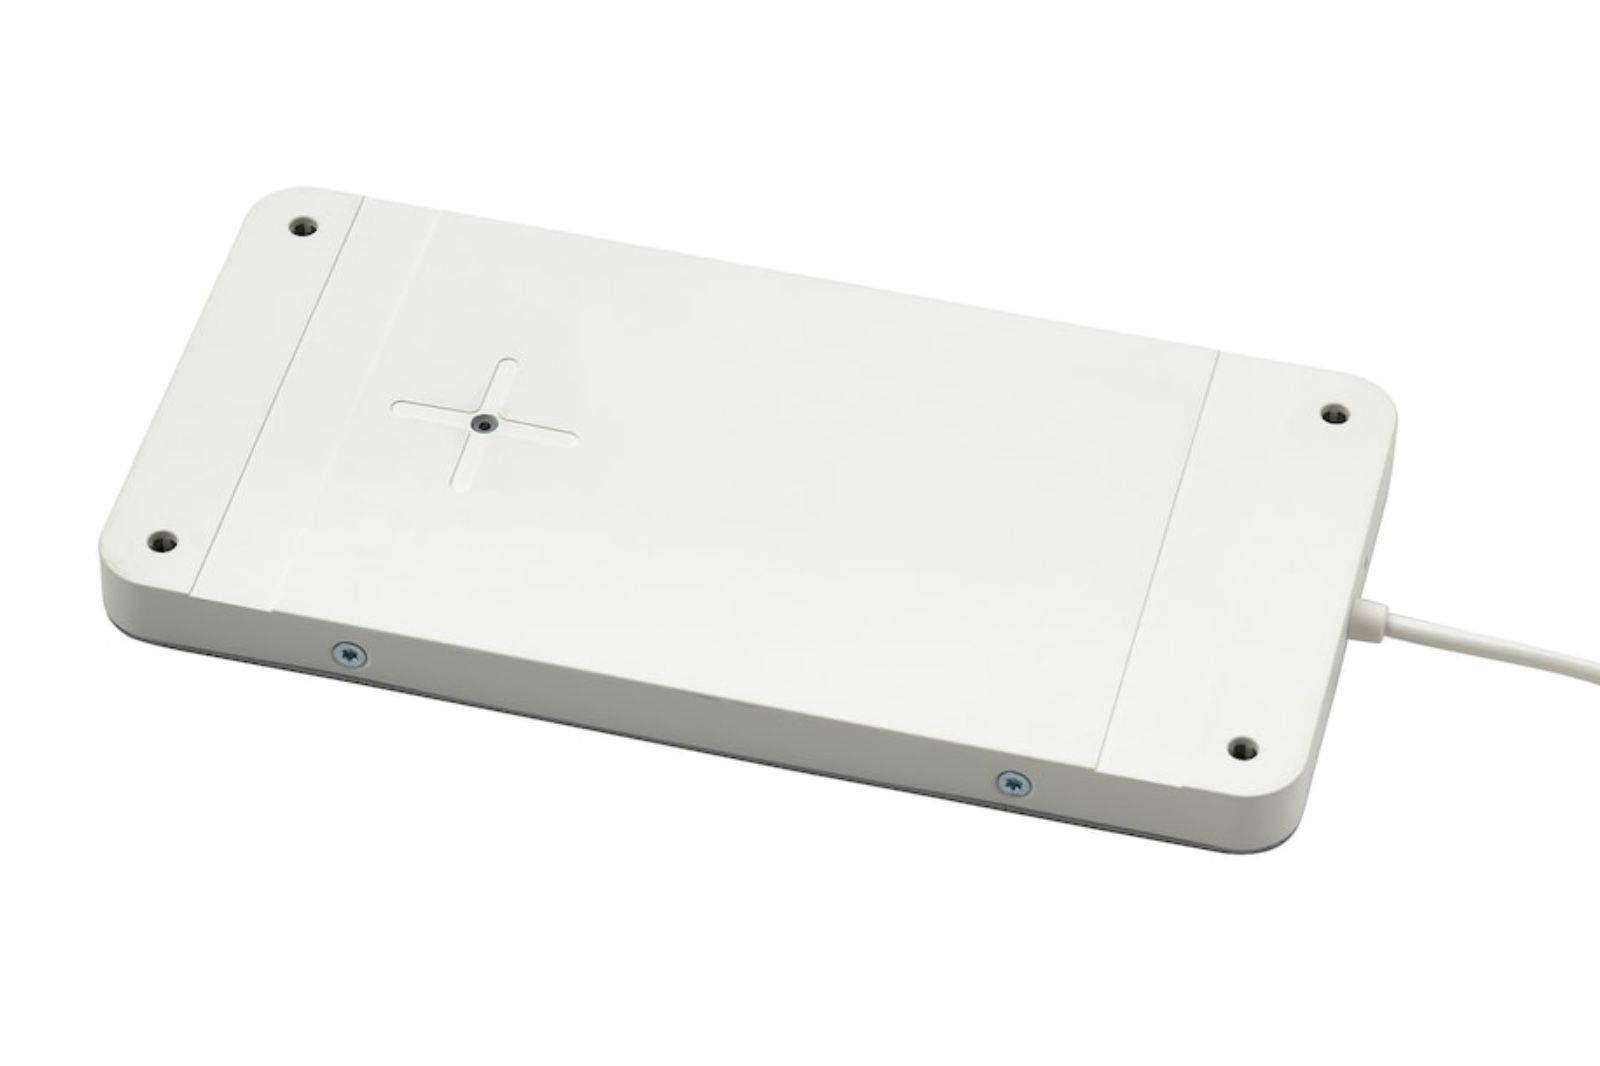 Ikea Sjömärke turns (almost) any desk into a wireless charging pad photo 1